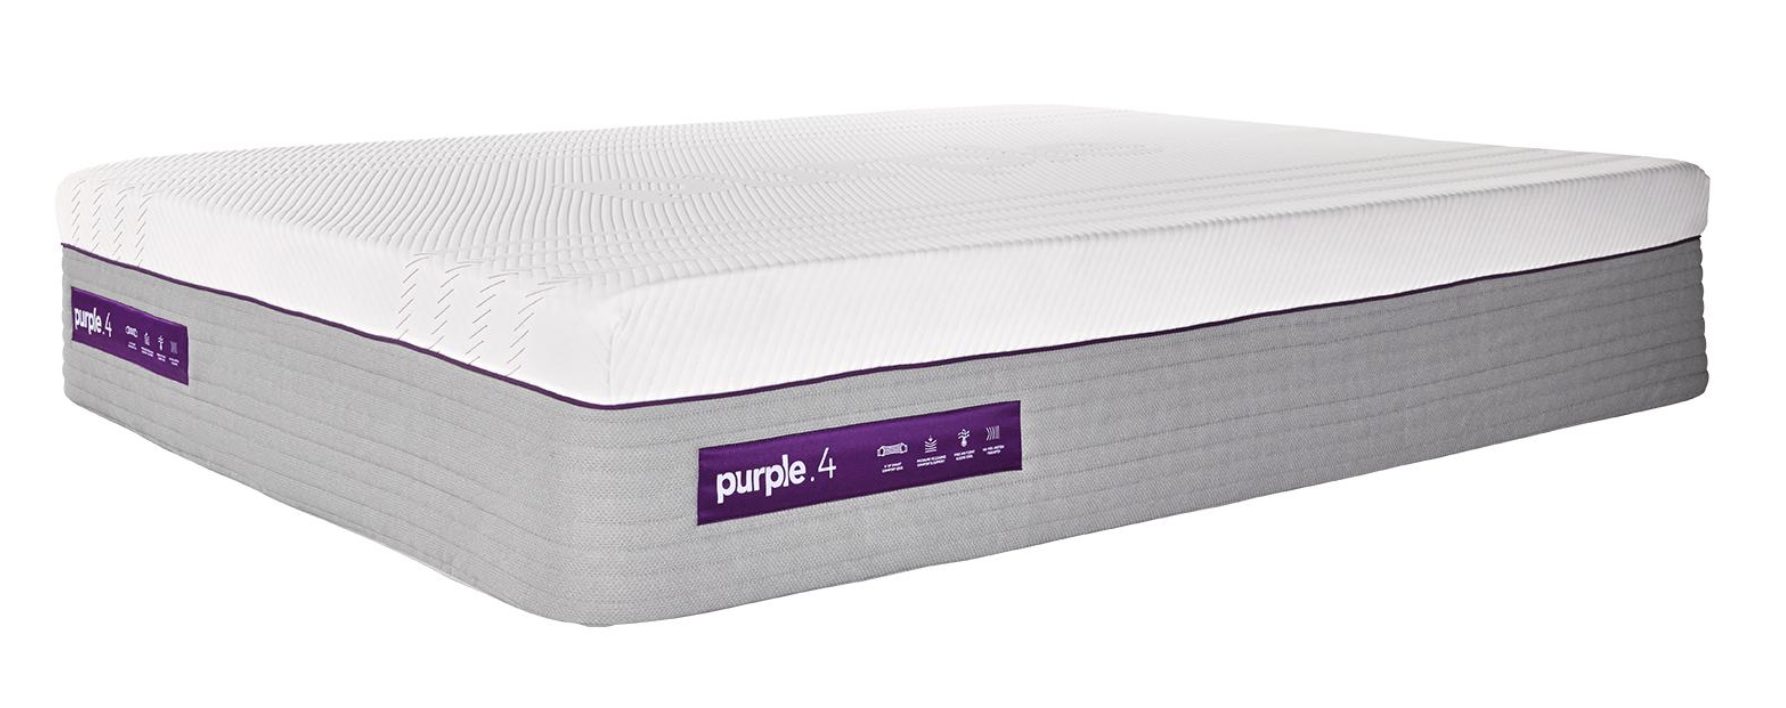 purple mattress review 2016